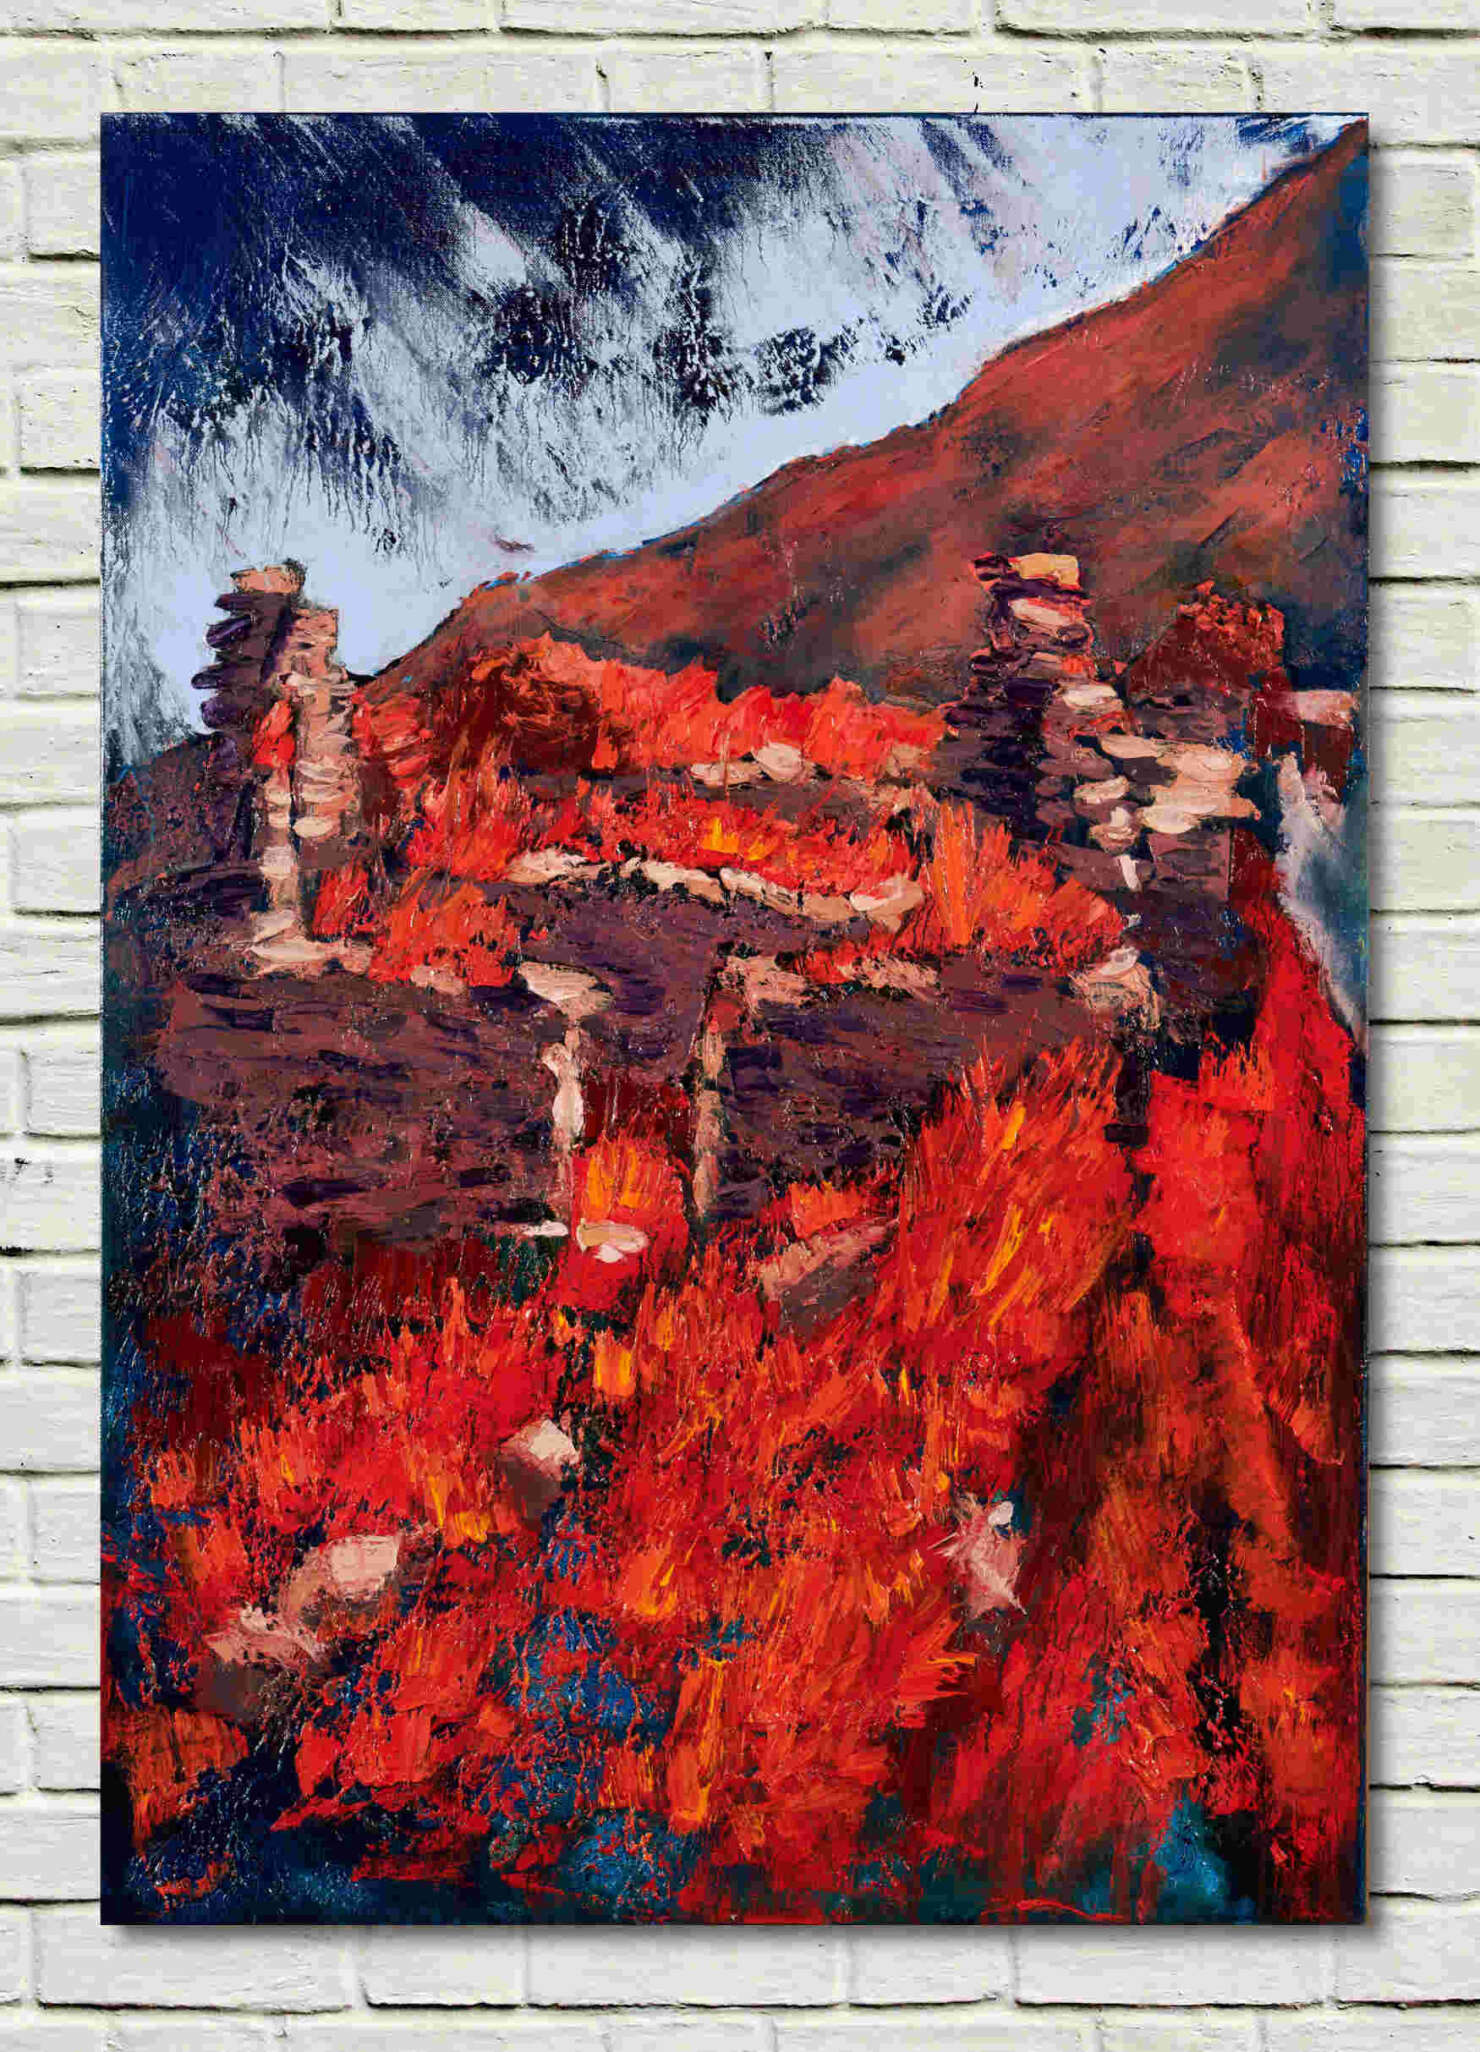 artist rod coyne's landscape "Famine Village Ruins West" is shown here, unframed on a white wall.